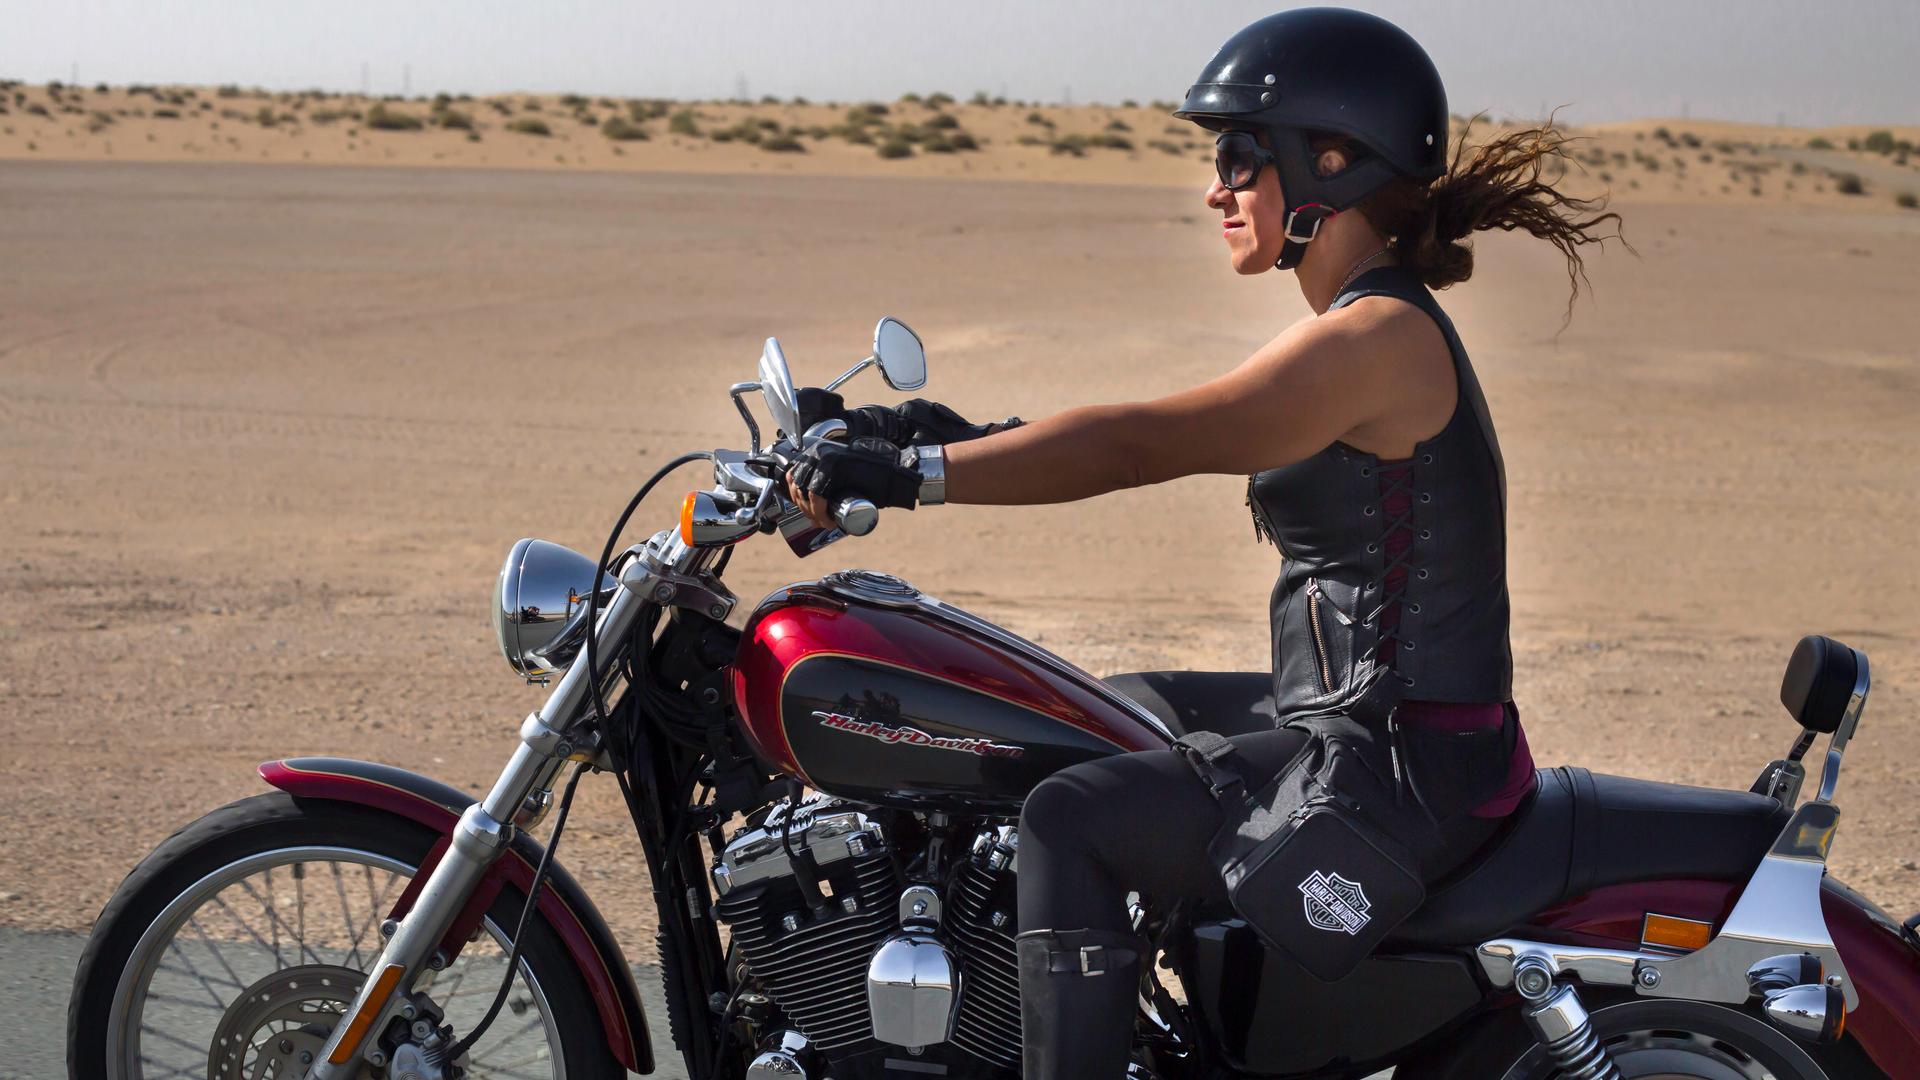 A female rider on International Female Ride Day in Dubai.